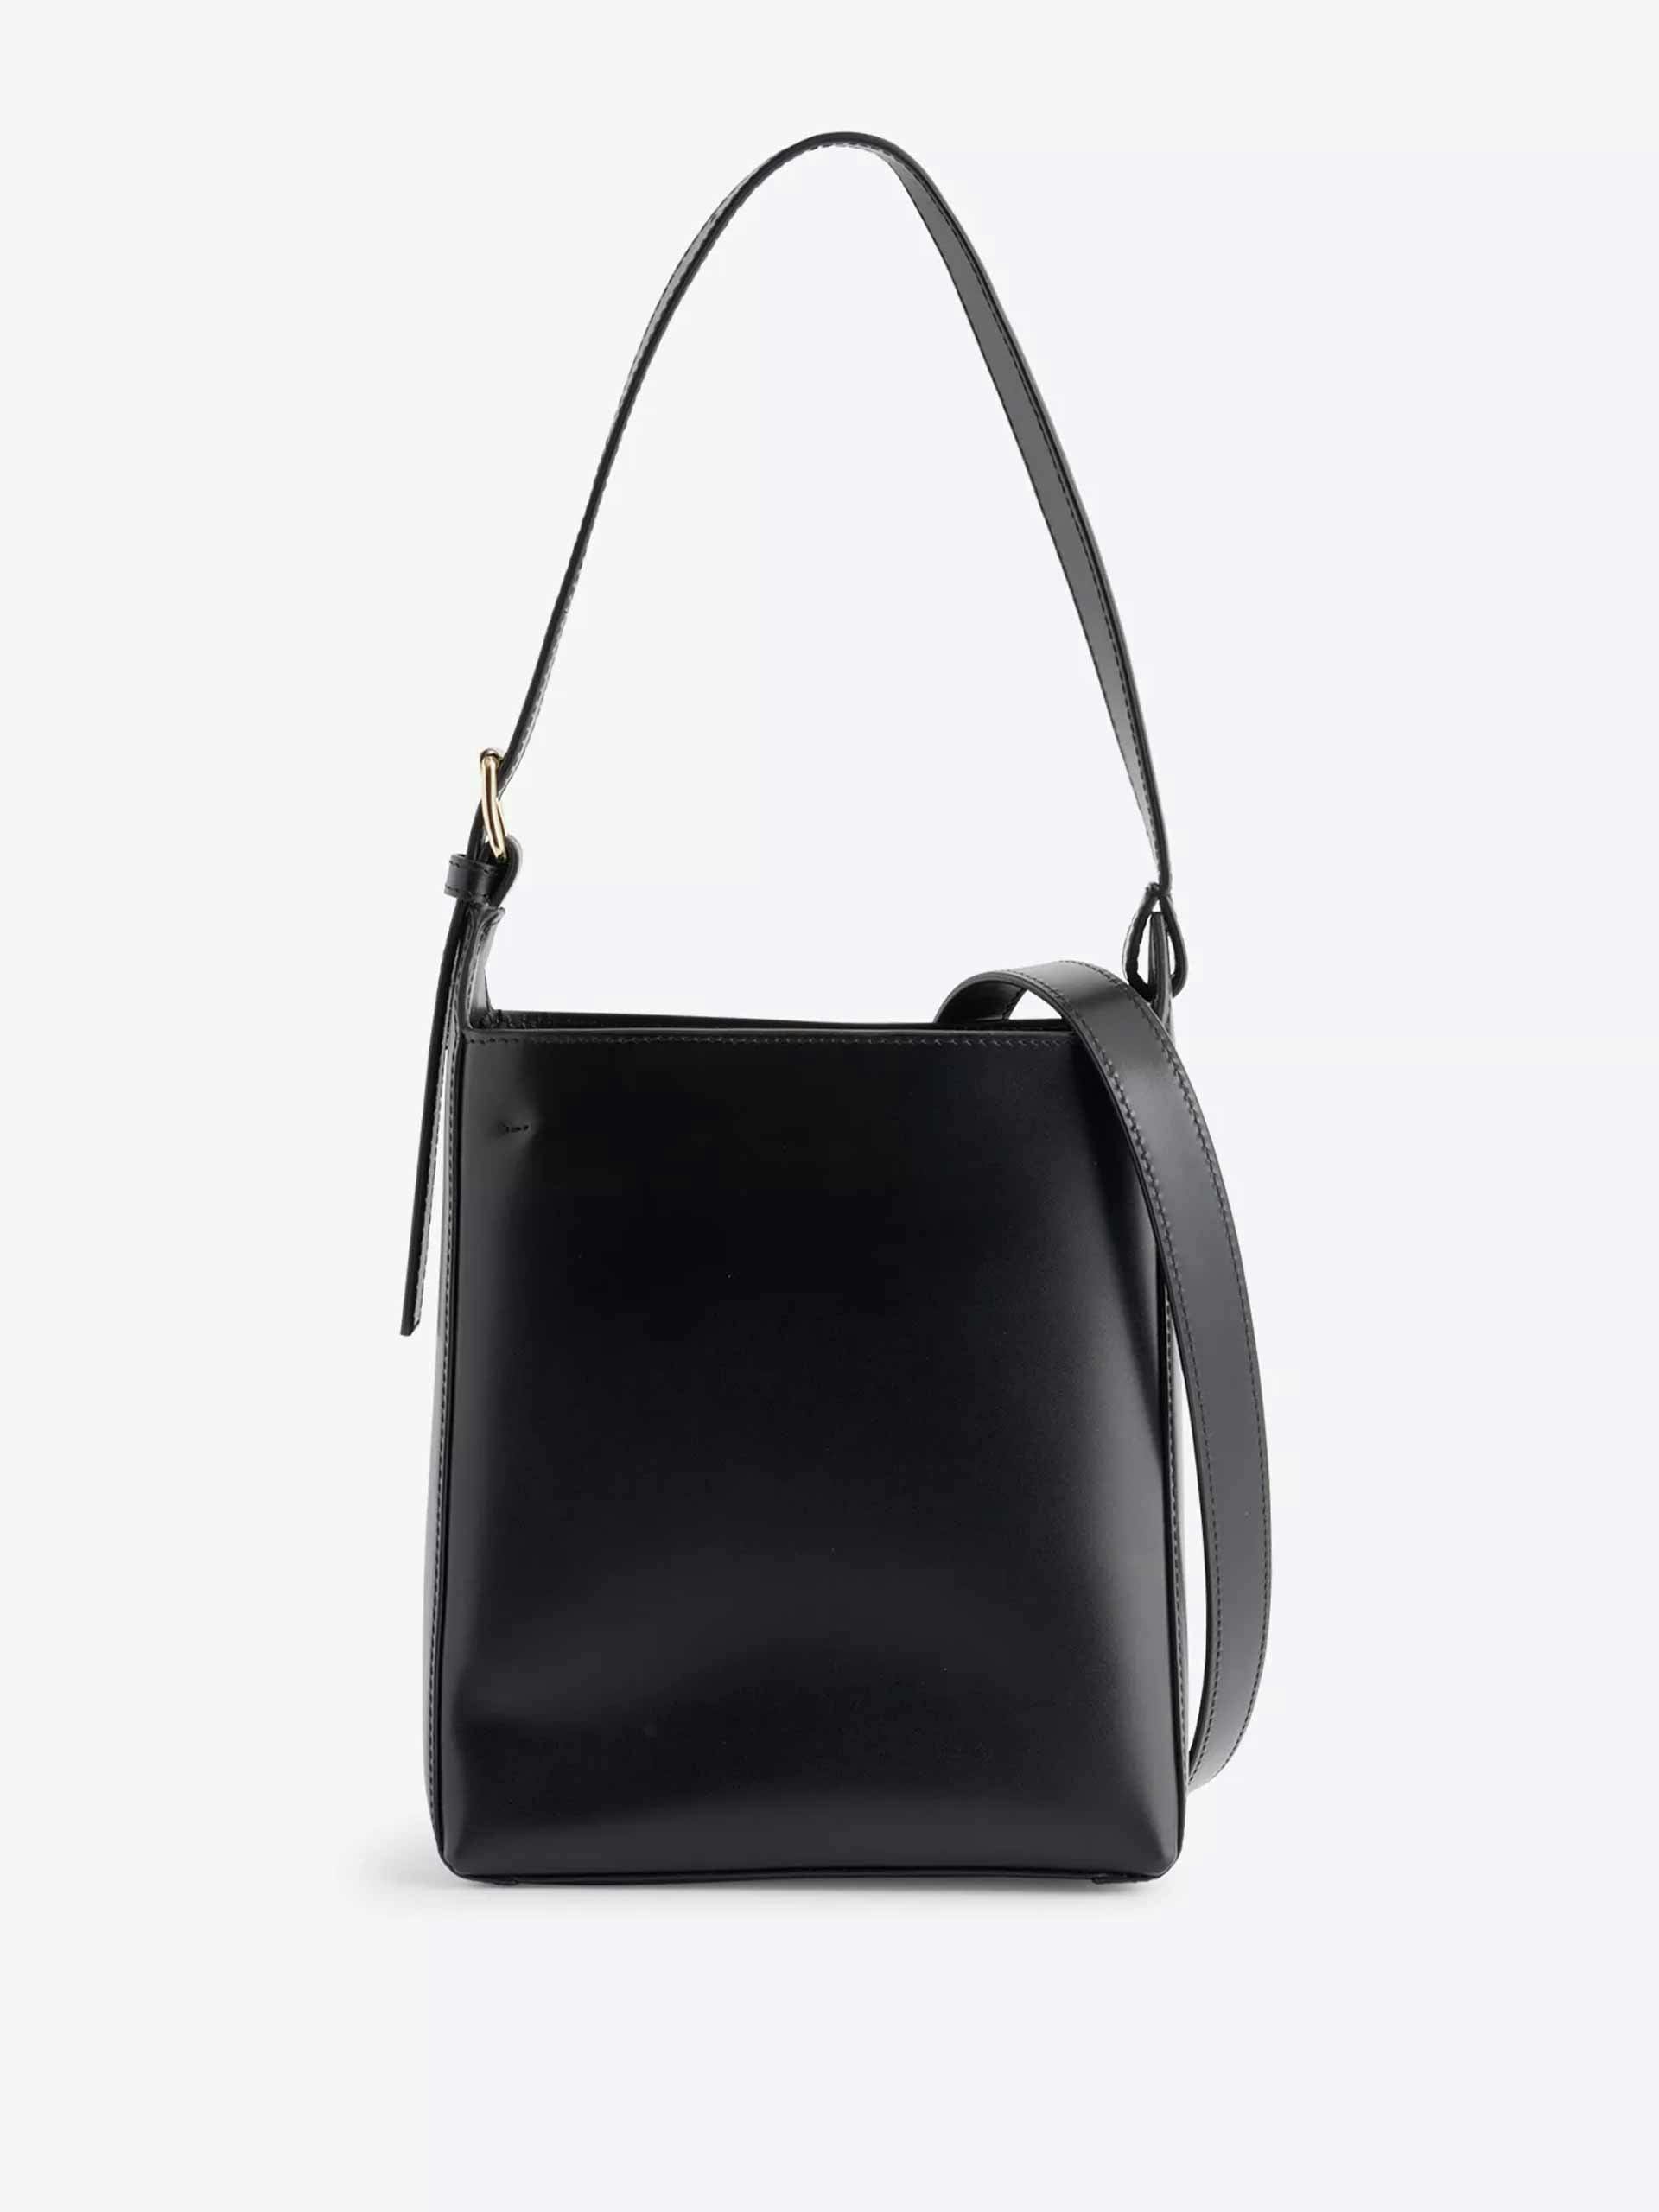 Virginie small leather shoulder bag